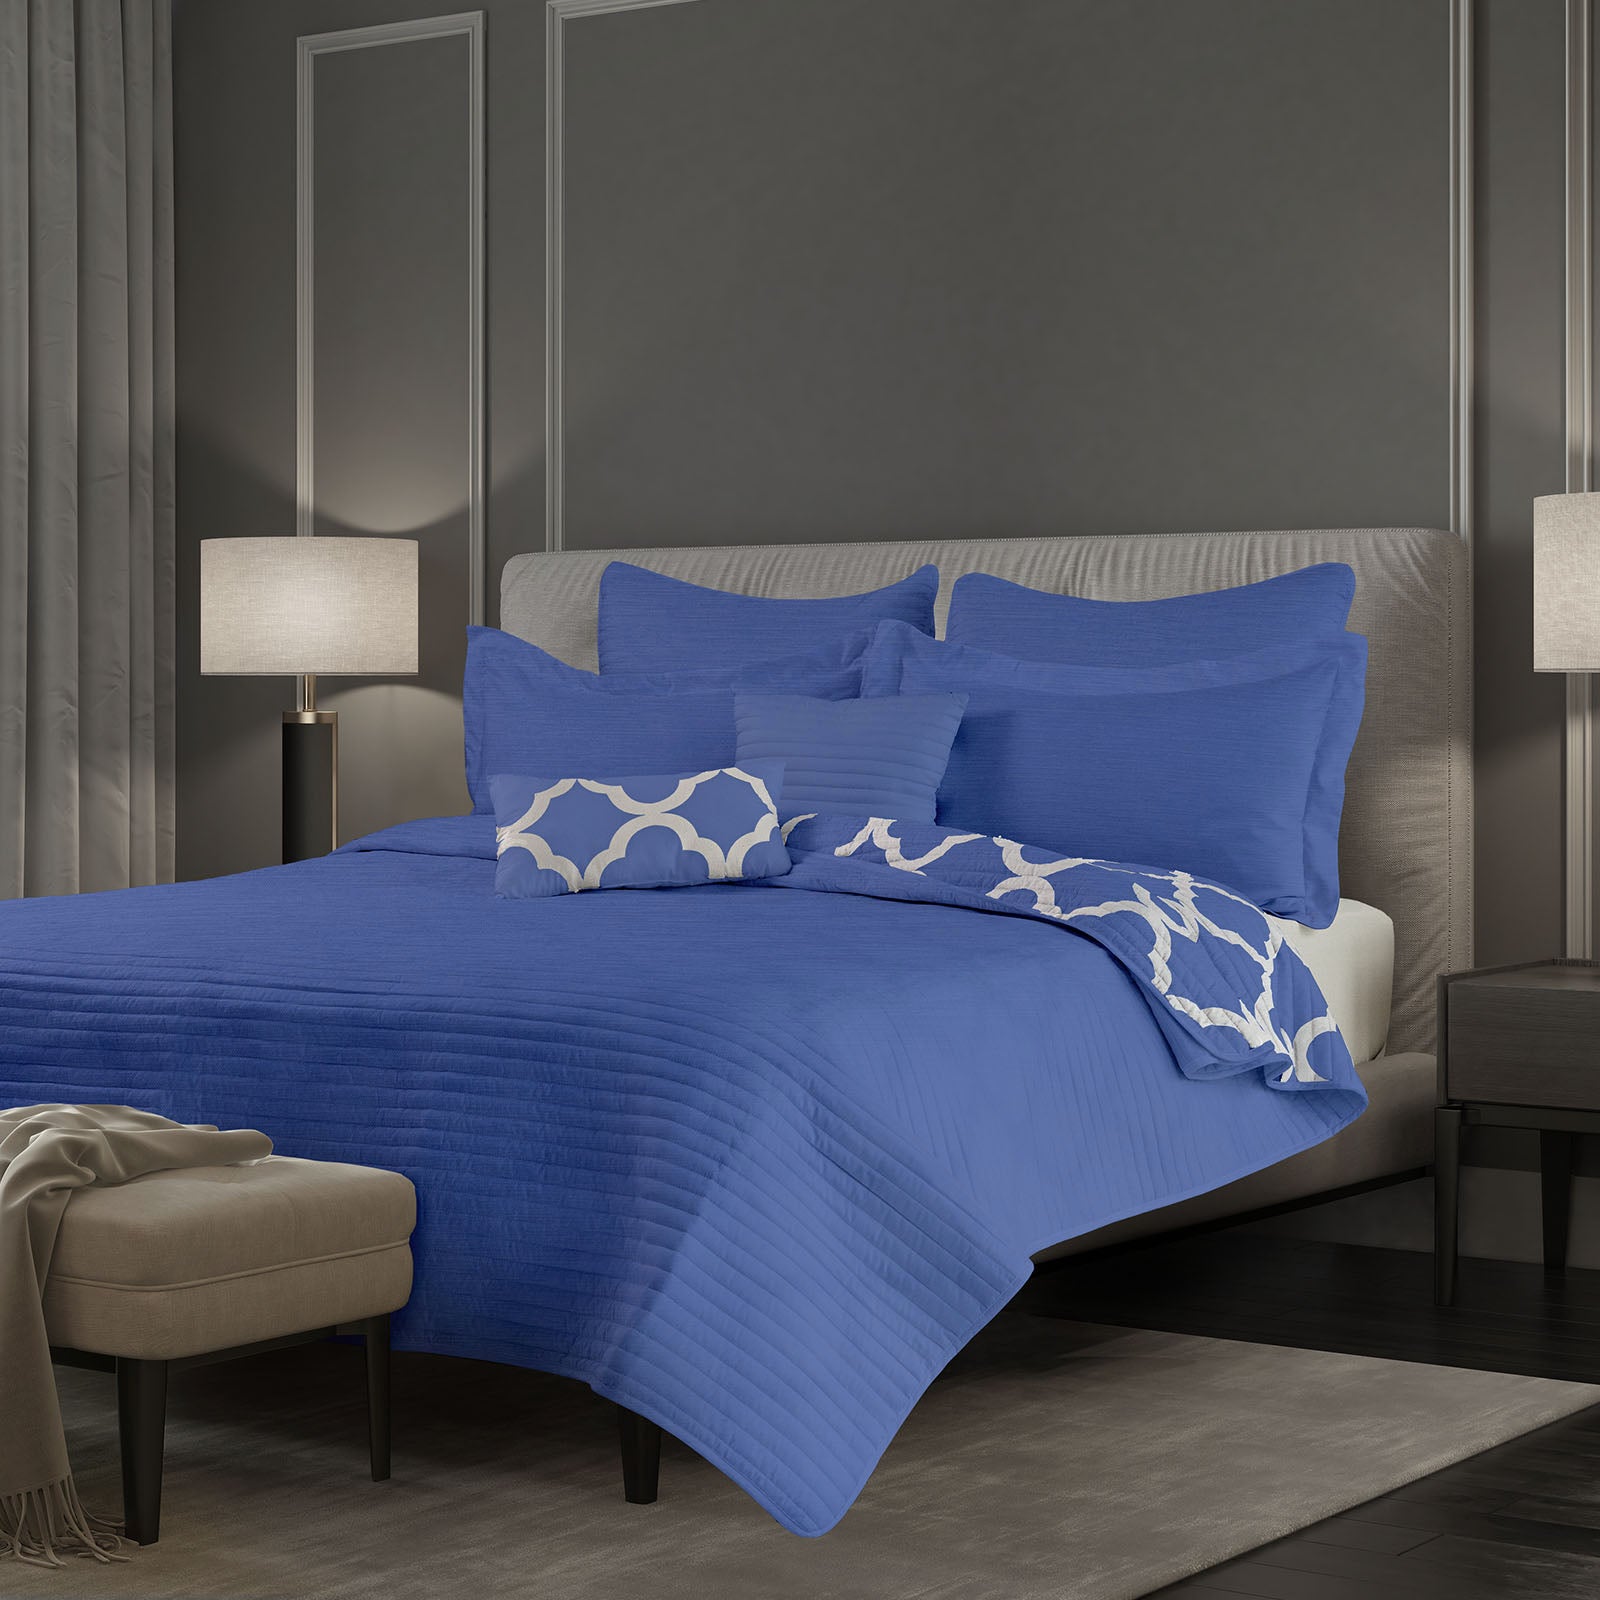 Royal Comfort Bamboo Cooling Reversible 7 Piece Comforter Set Bedspread - Queen - Royal Blue - BM House & Garden